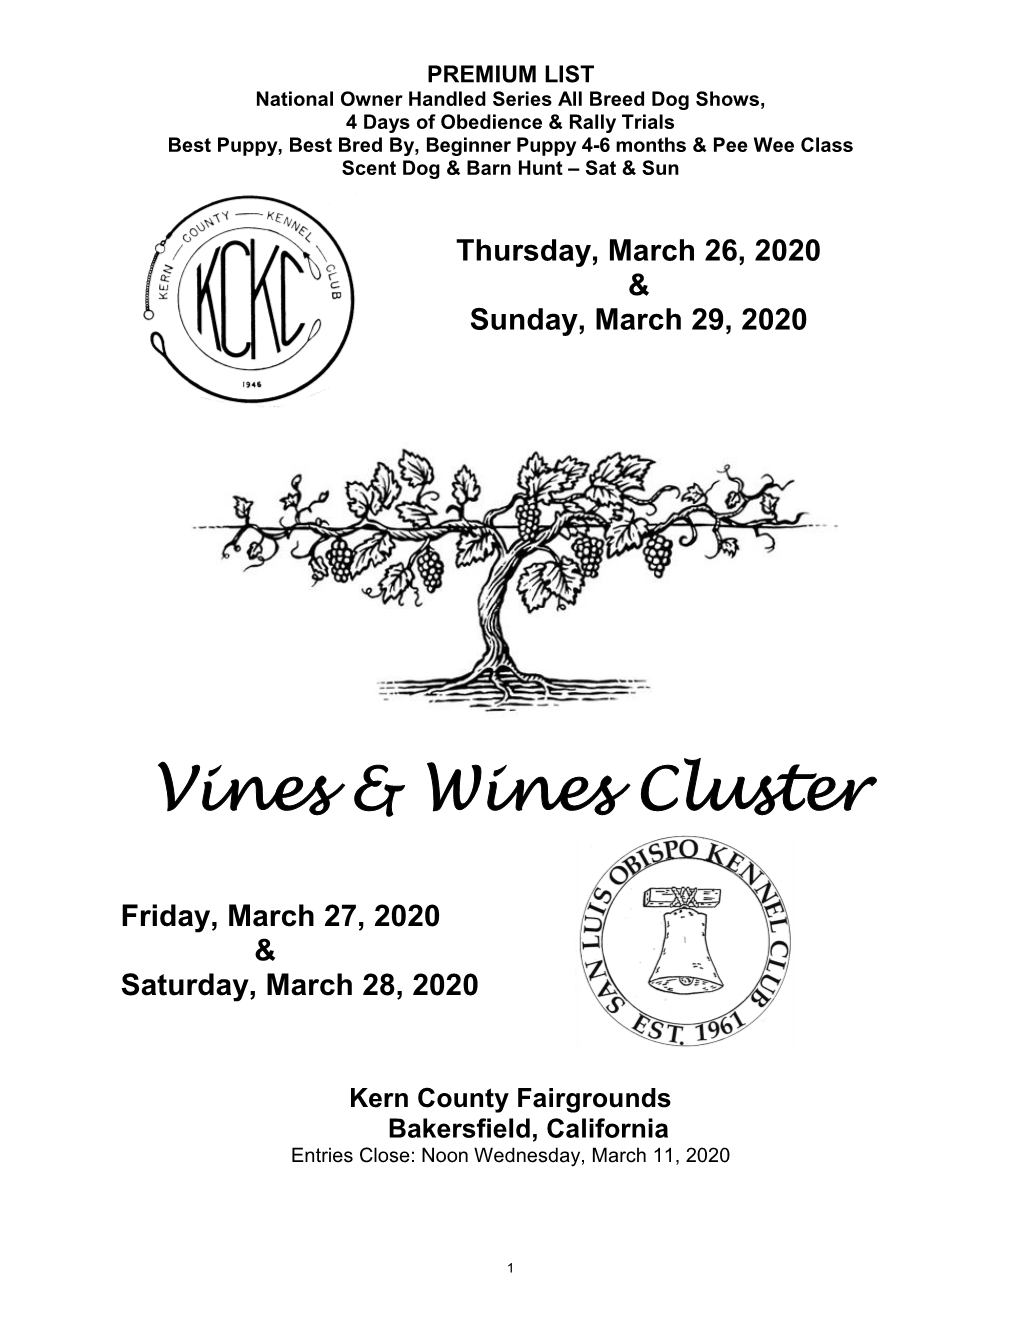 Vines & Wines Cluster